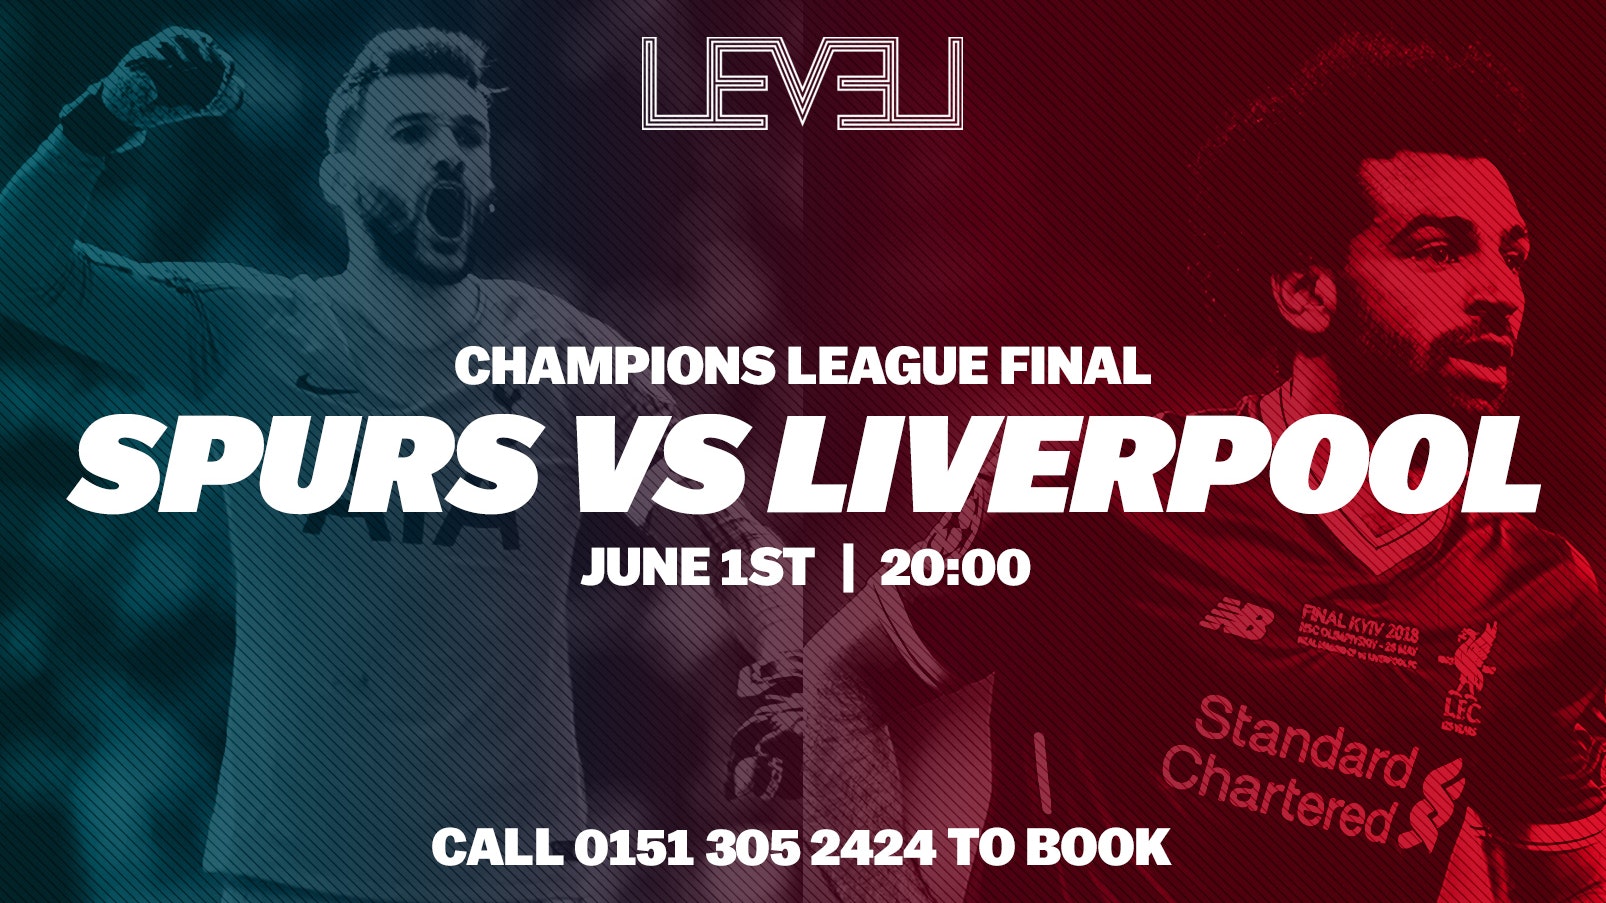 Champions League Final LIVE at Level